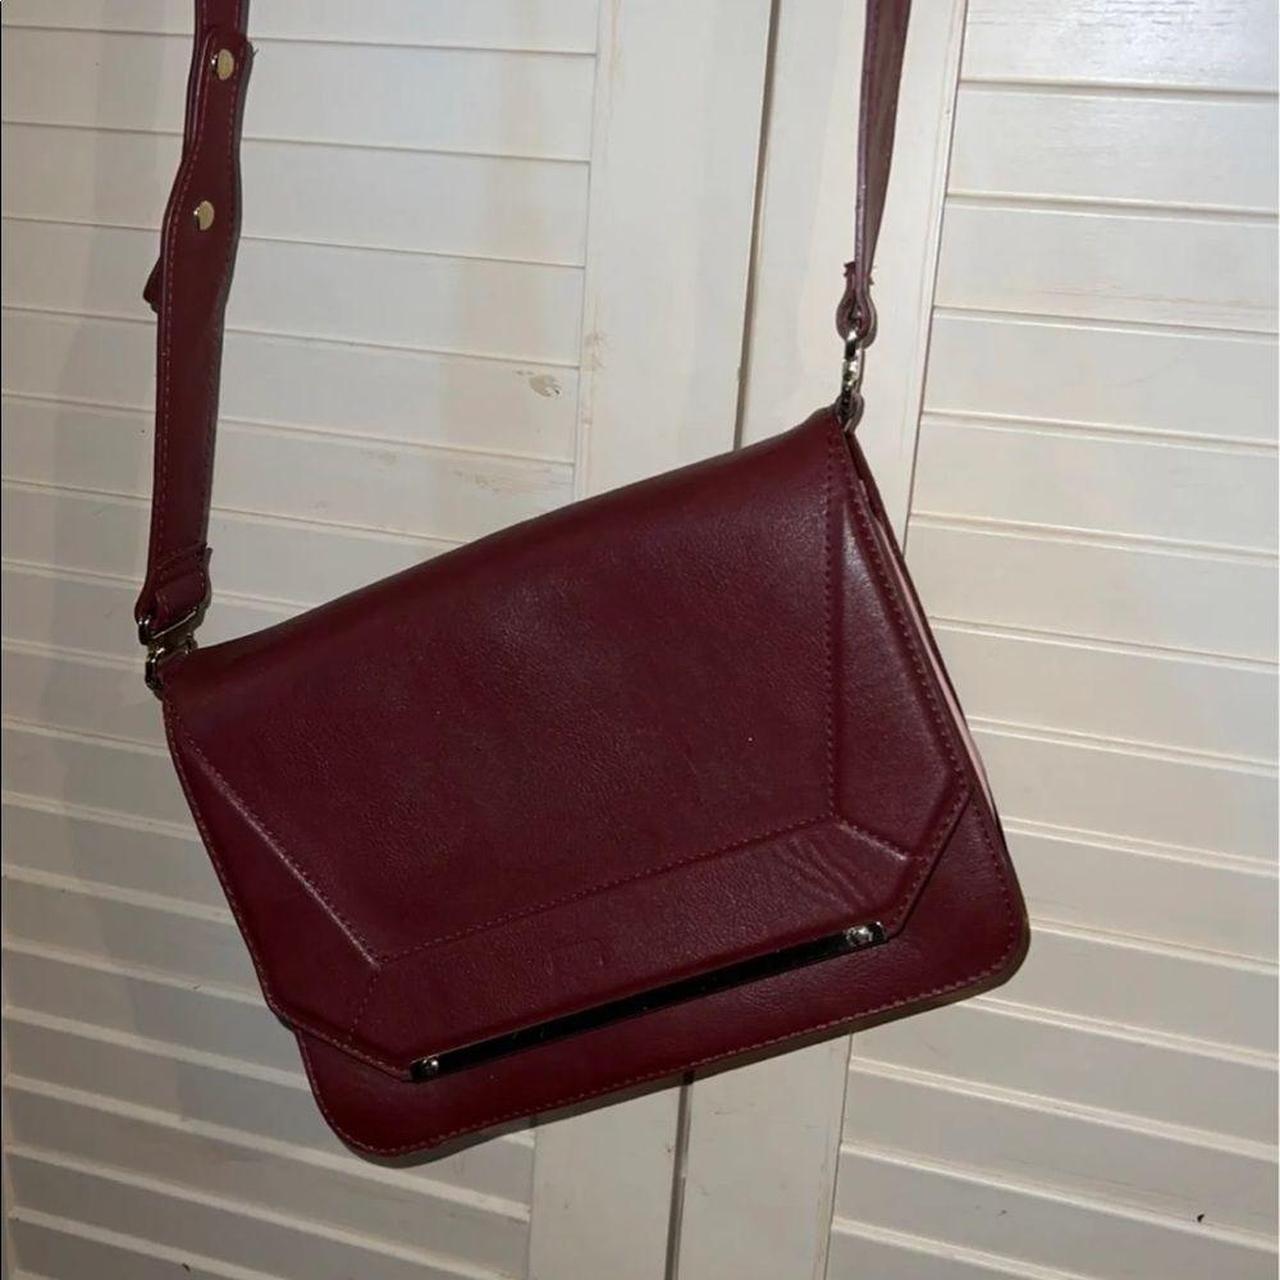 Bottega Veneta | Bags, Women handbags, Expensive handbags